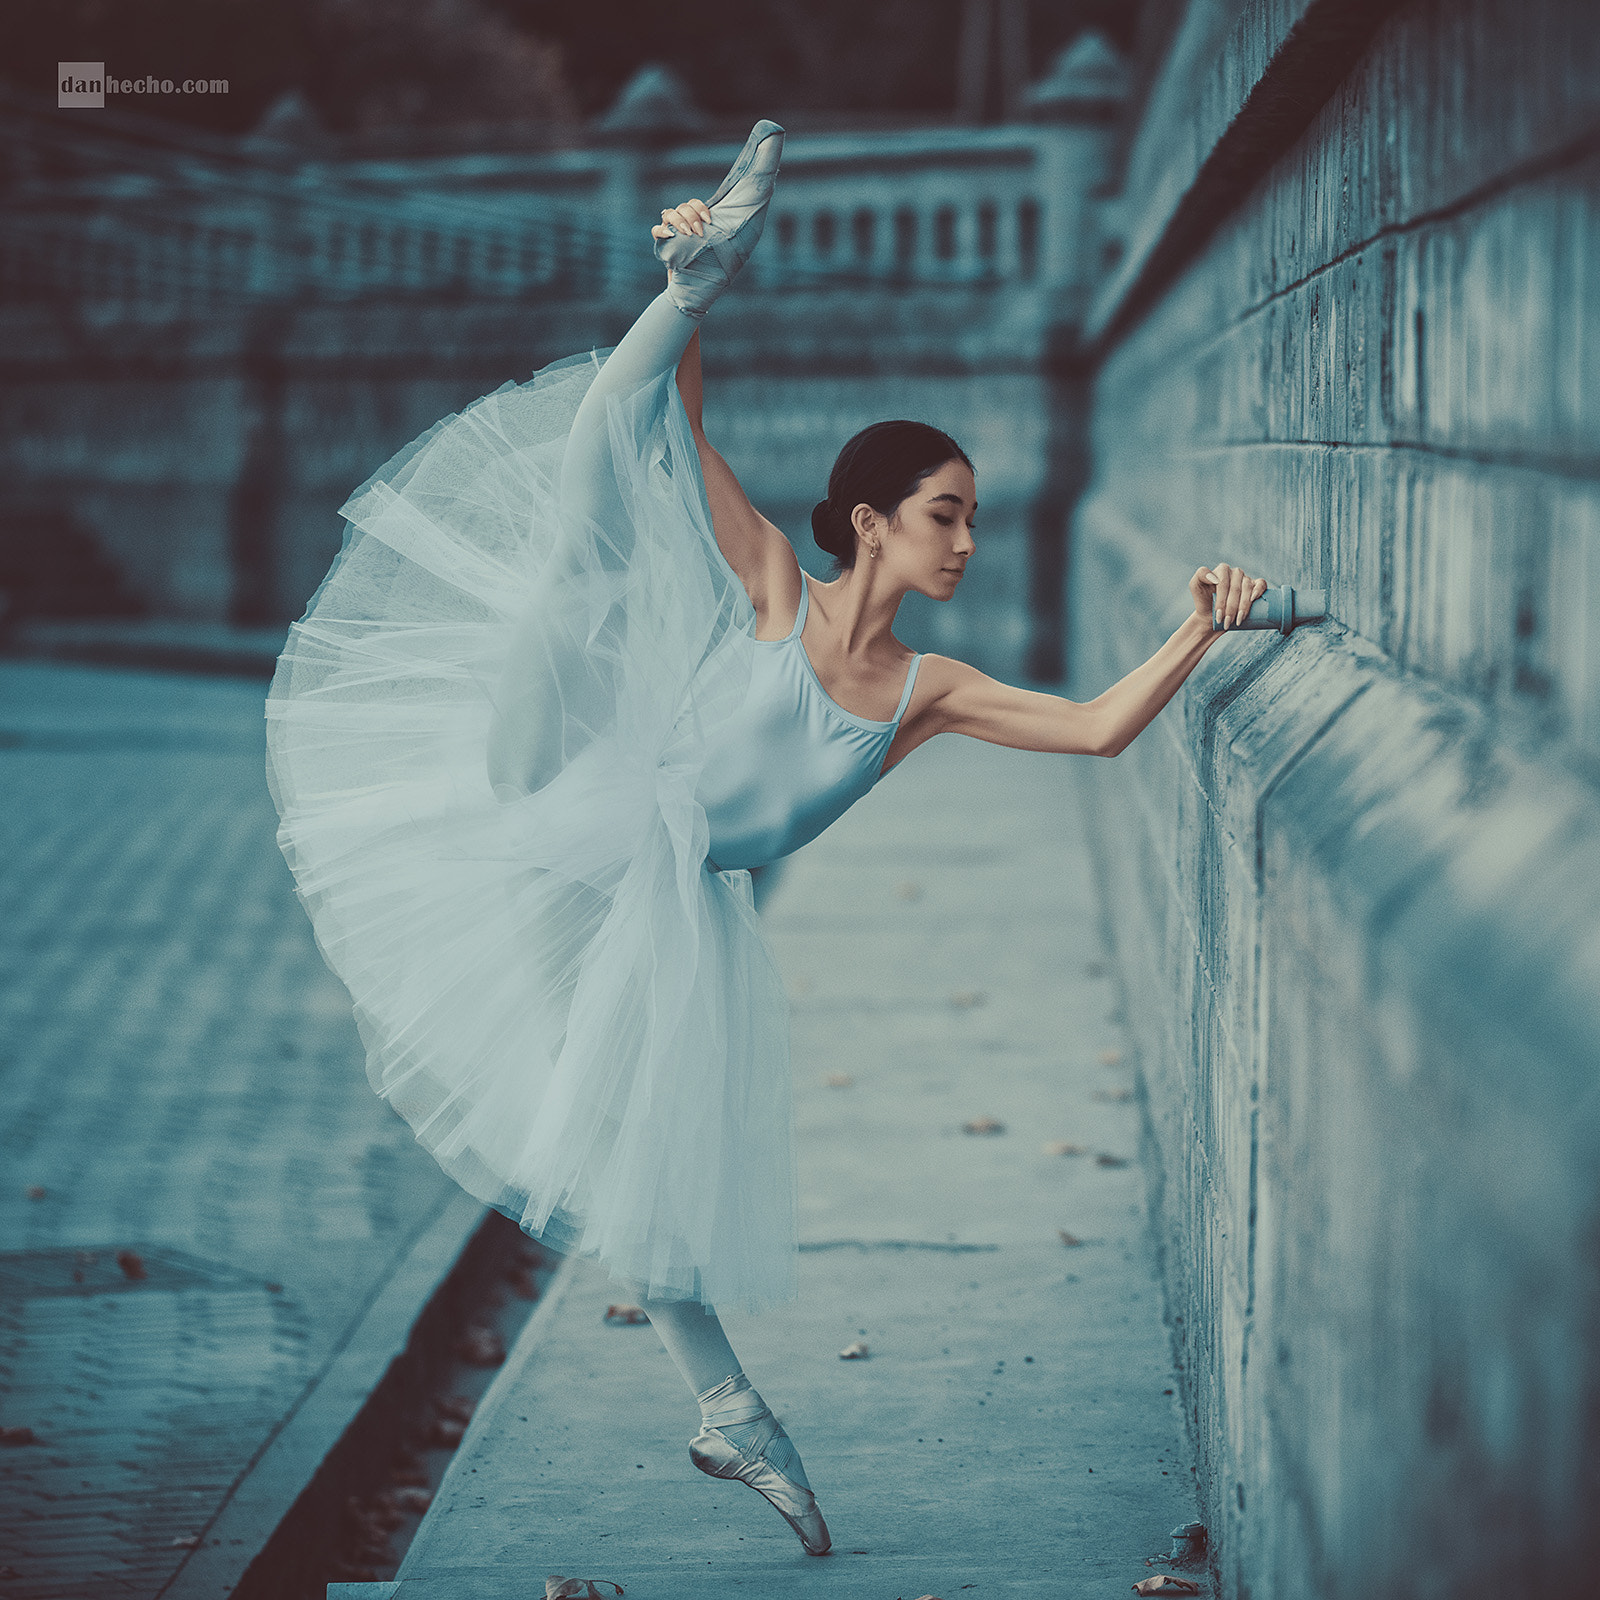 Dan Hecho Women Ballerina Dark Hair Hairbun Dress White Clothing Flexible Stretching Outdoors Blue B 1600x1600